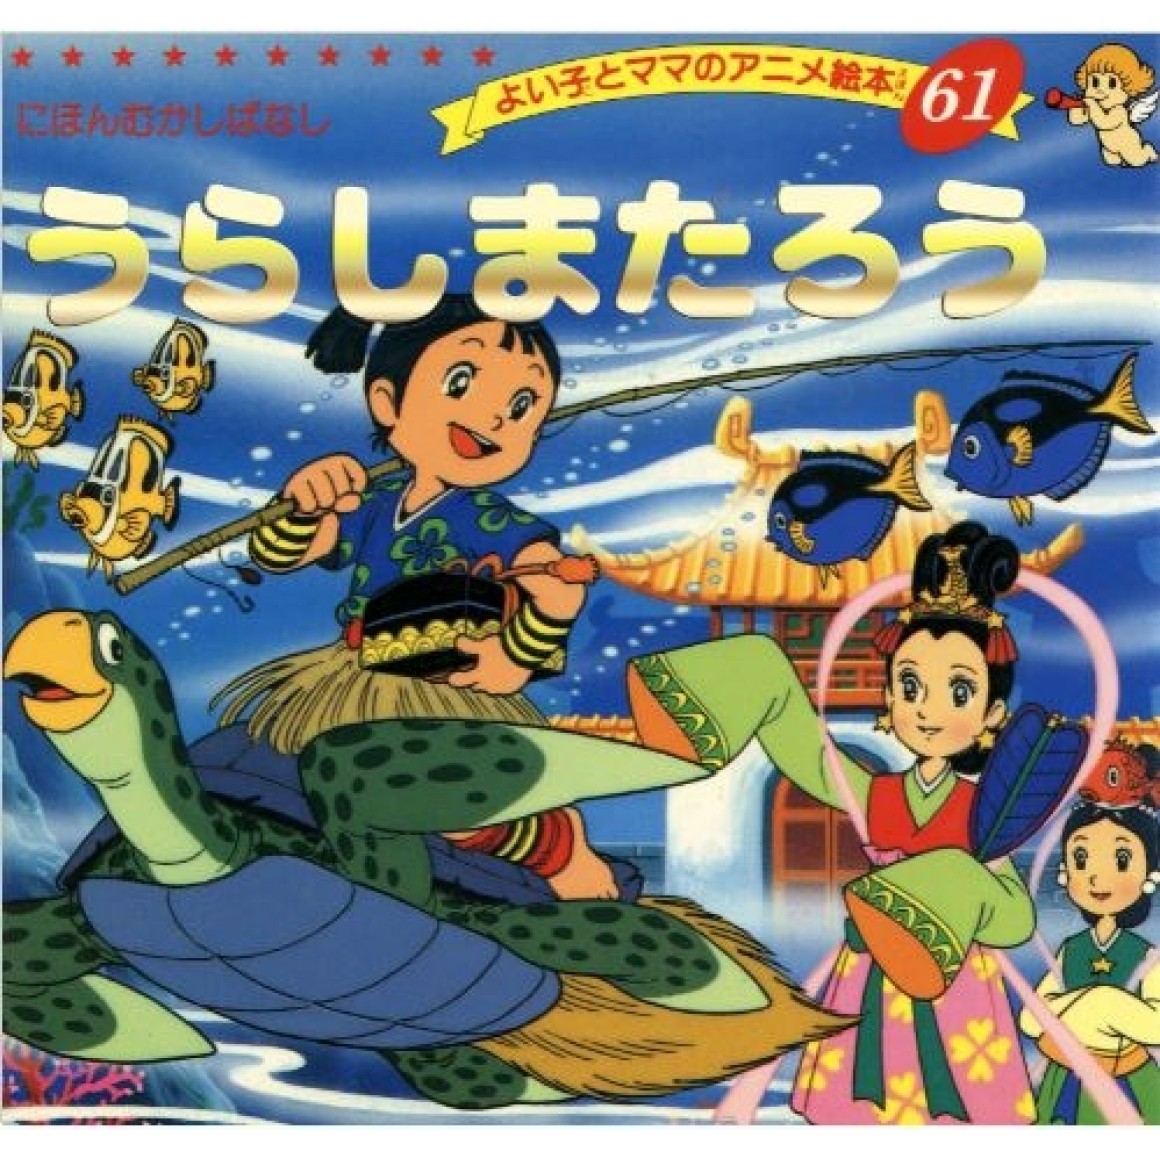 Anime Ehon 61 Urashima Taro - Edição japonesa